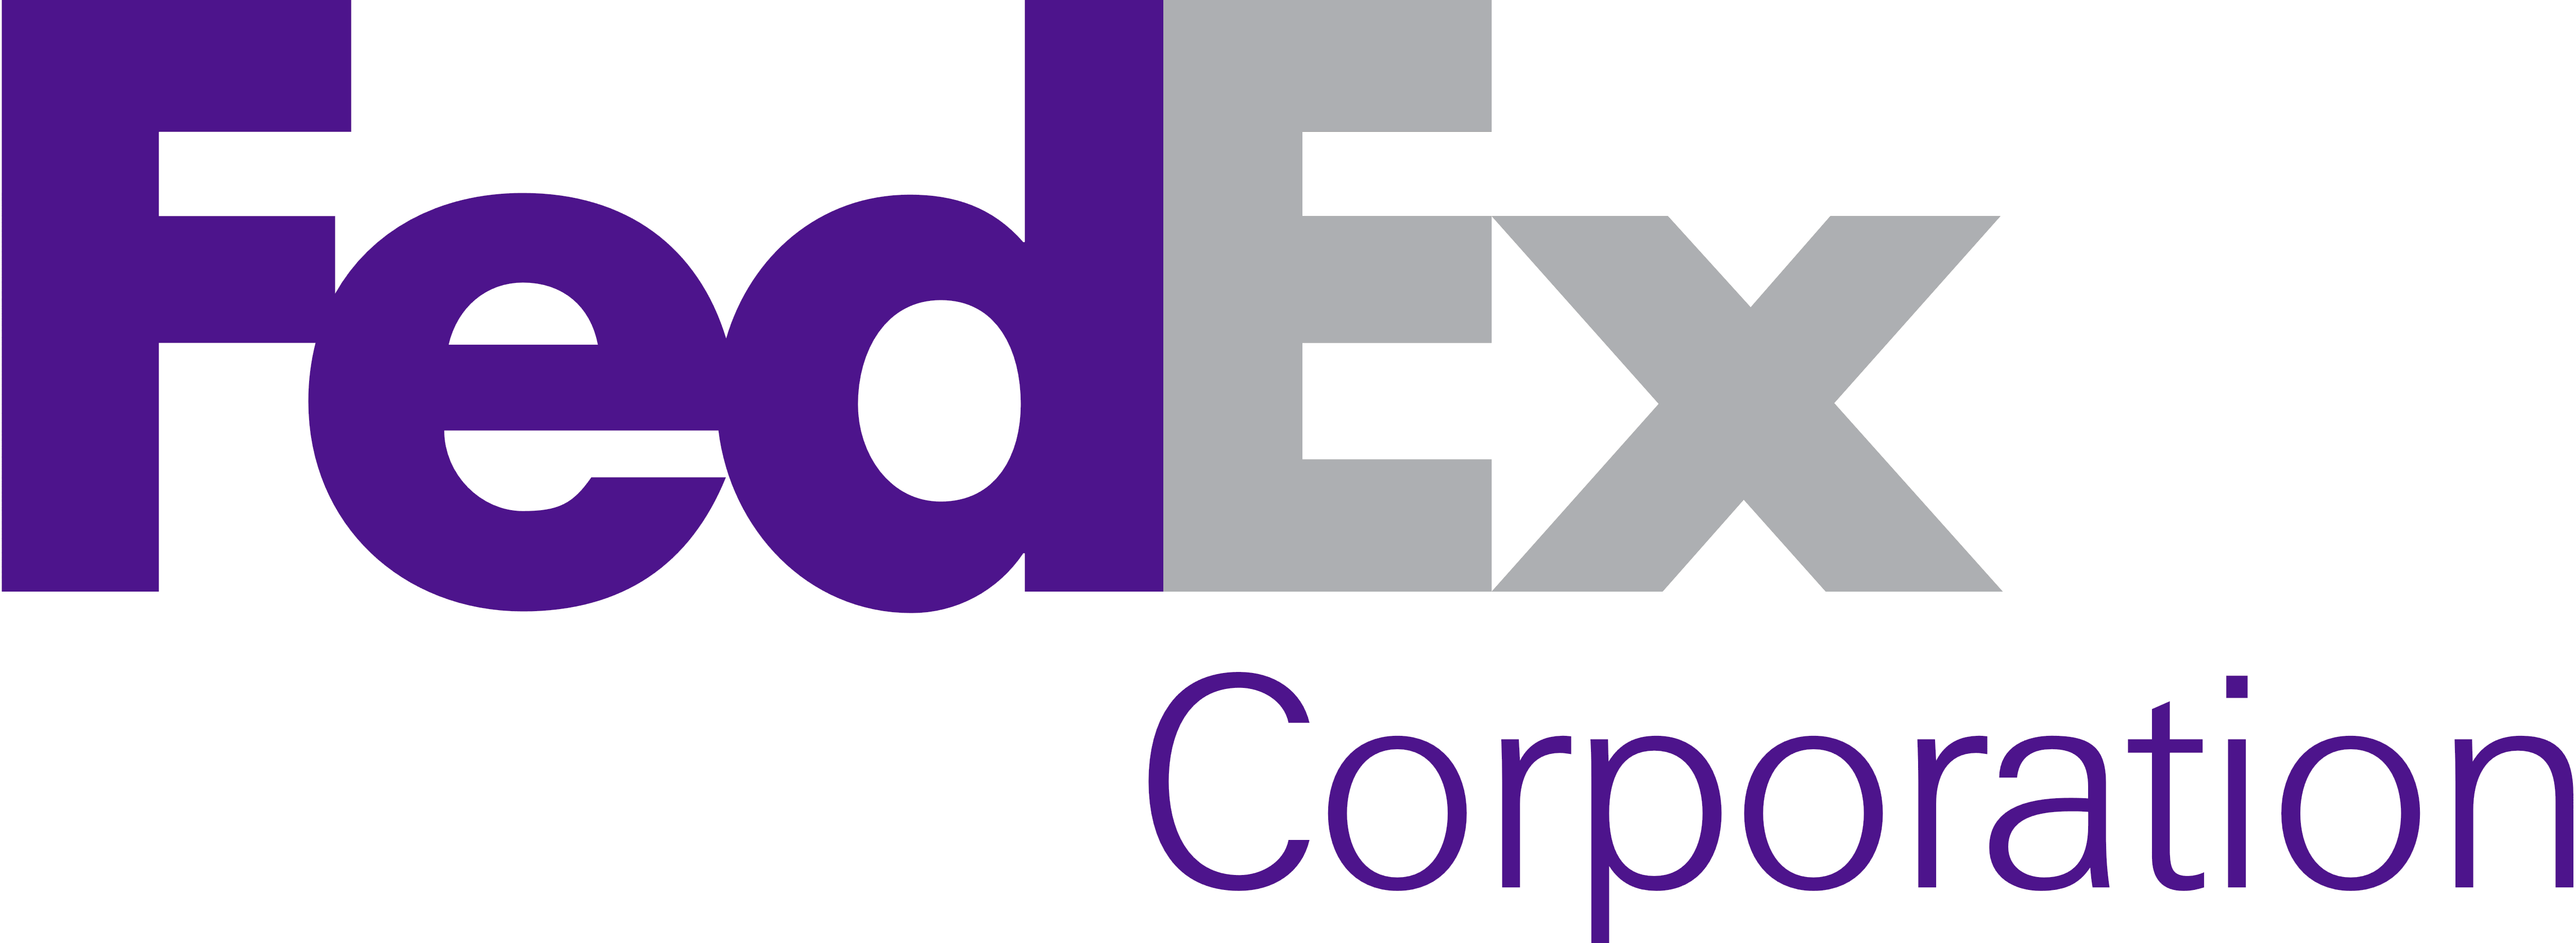 fedex corporation logos png download #42679